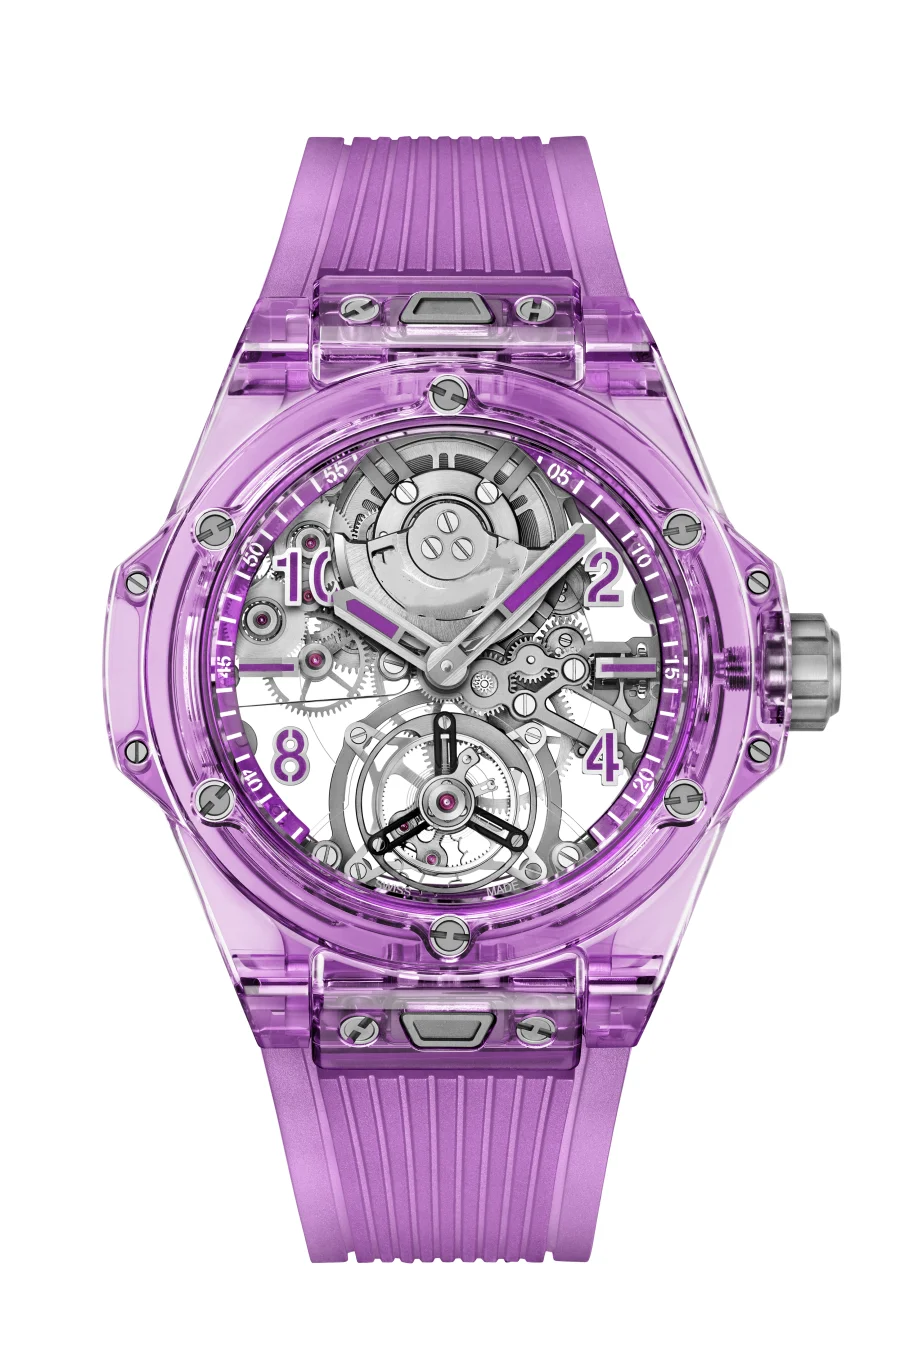 

5pcs 44MM Big Face Large Extra Size Watch-Polished Purple Sapphire Crystal Dial Waterproof Tourbillon Automatic Wristwatch